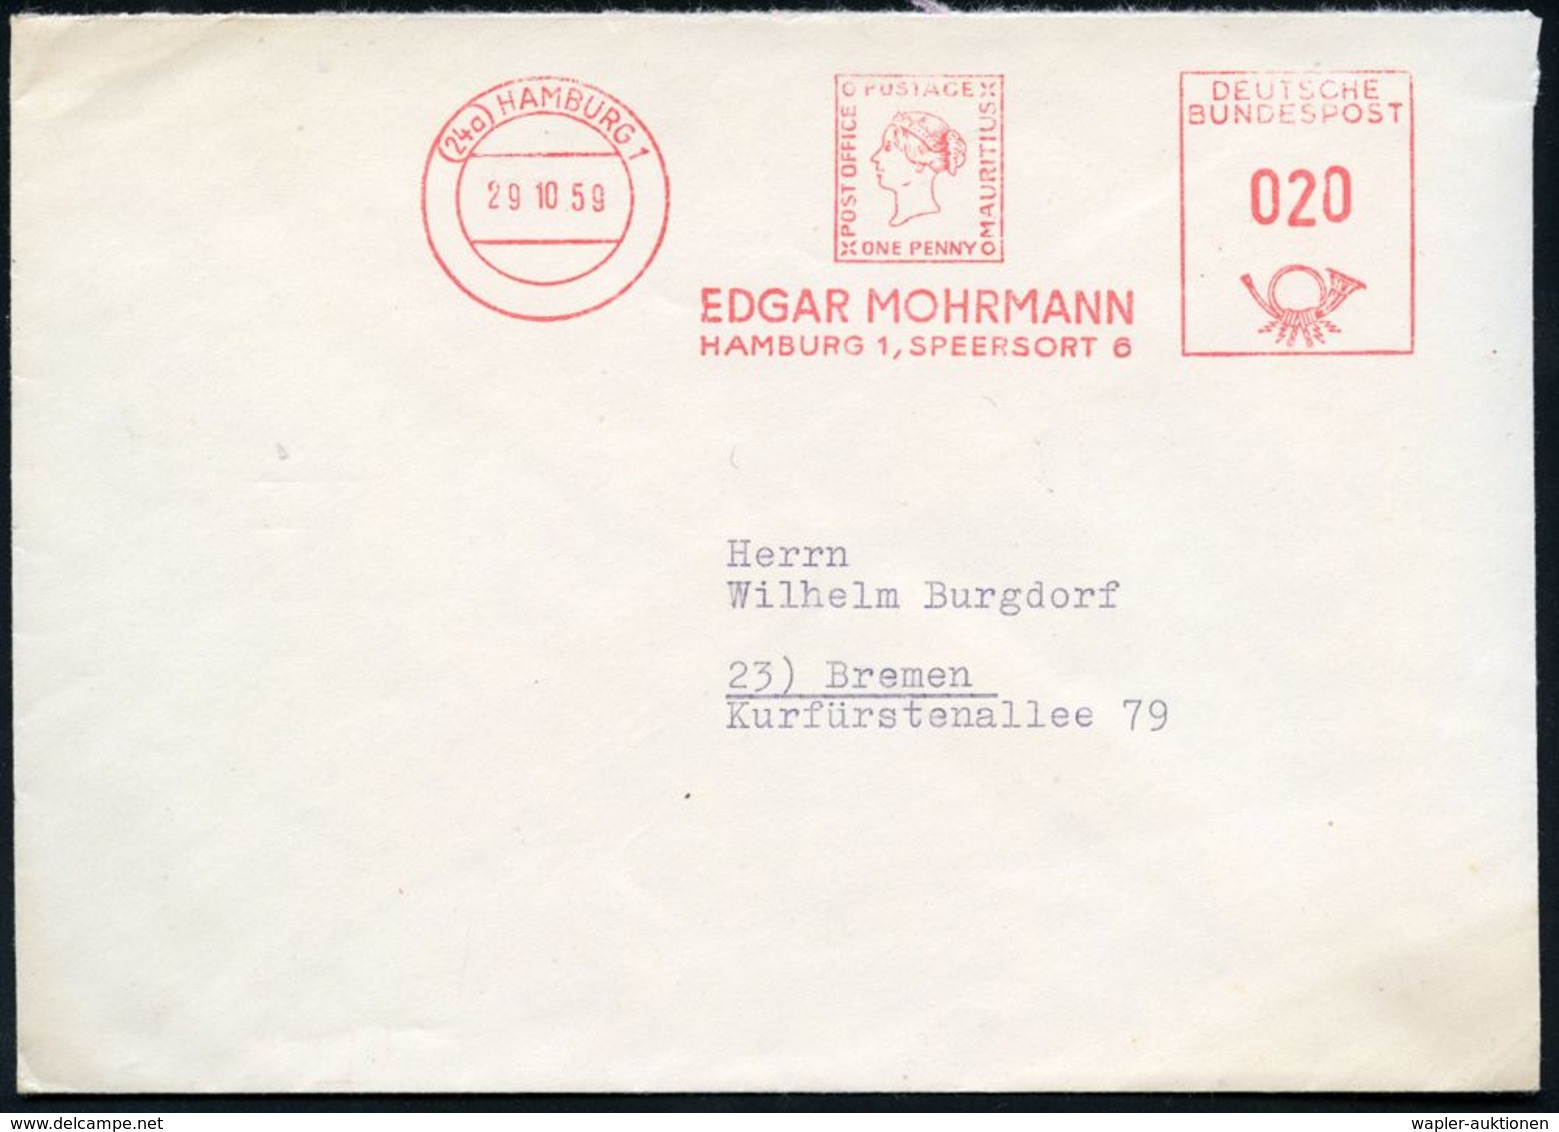 (24 A) #bzw.# 2 HAMBURG 1/ EDGAR MOHRMANN.. 1959/79 2 Verschedene AFS Mit Alter Bzw. Neuer PLZ = Je "Blaue Mauritius" 1  - Postzegels Op Postzegels